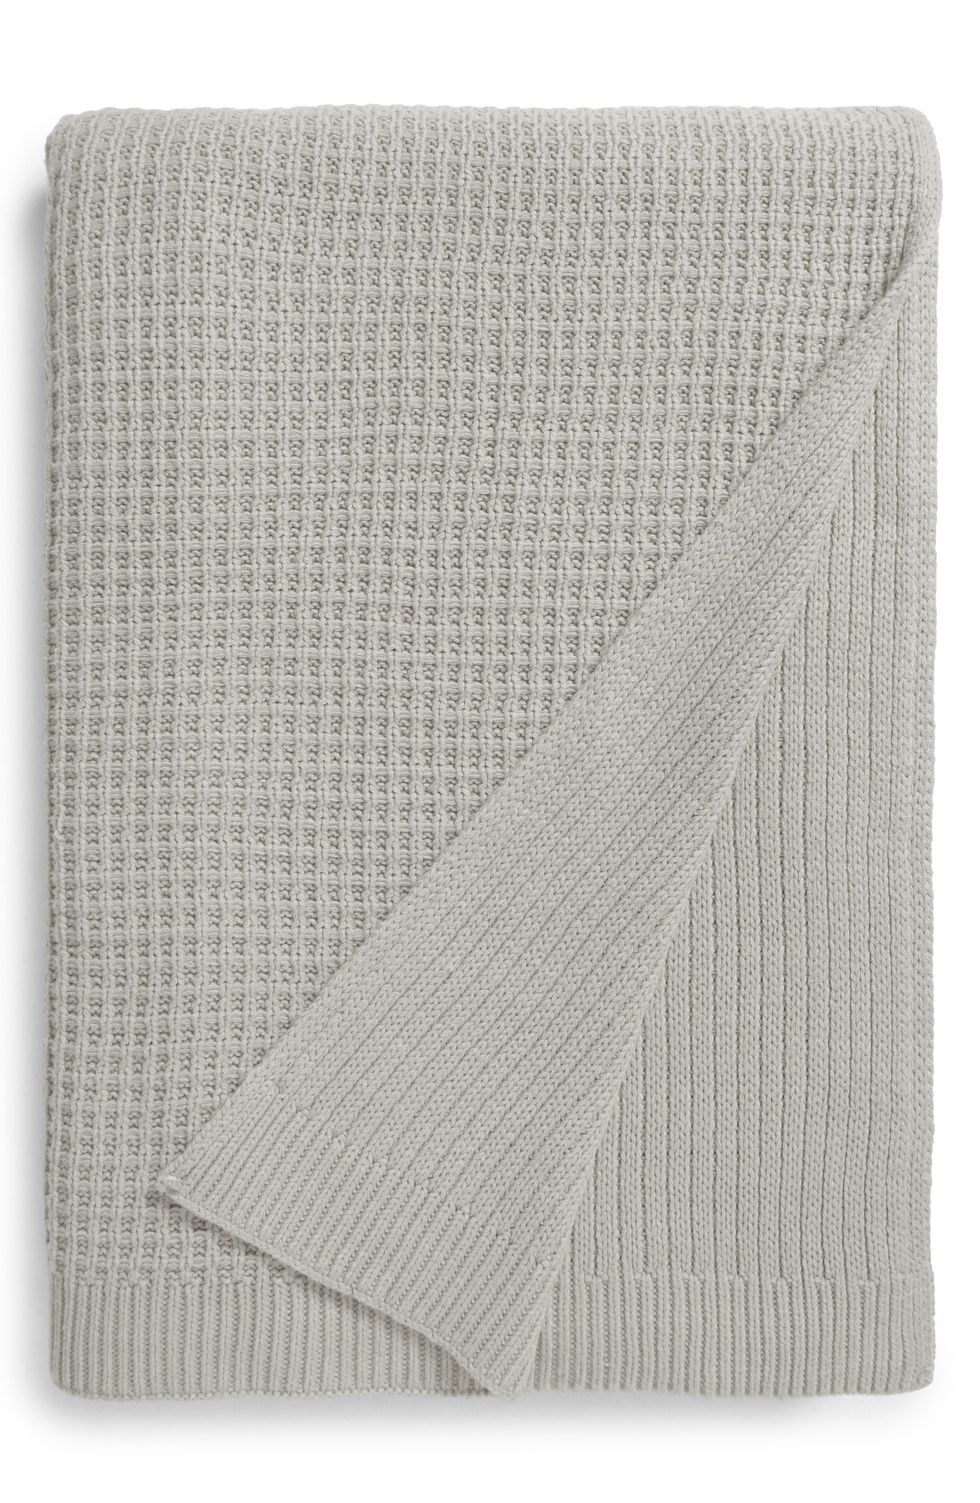 Reversible Knit Blanket